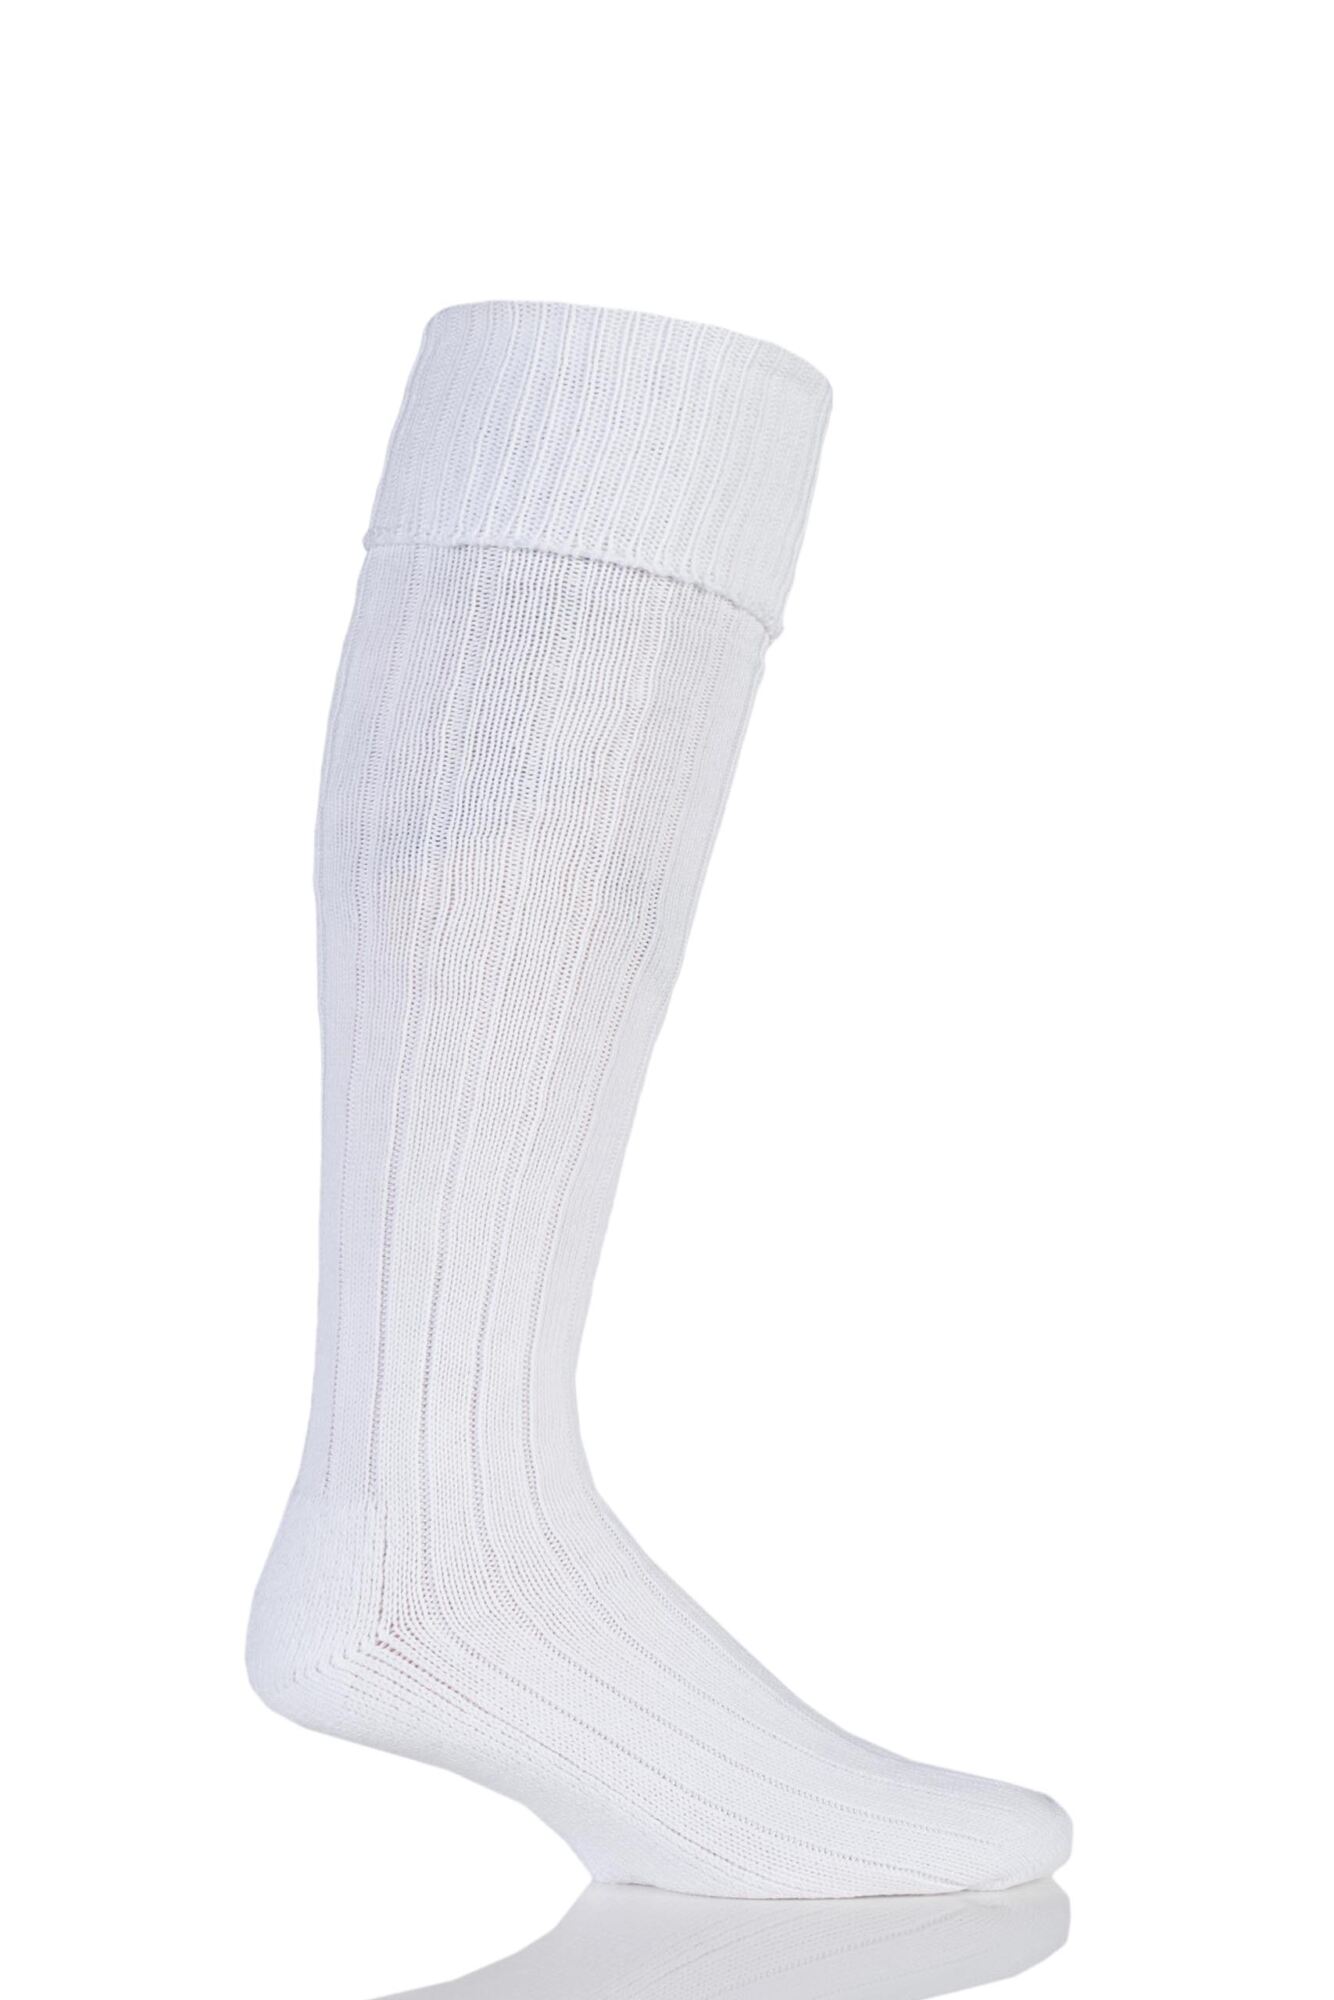 Mens 1 Pair Glenmuir Birkdale Cotton Cushioned Knee High Golf Socks